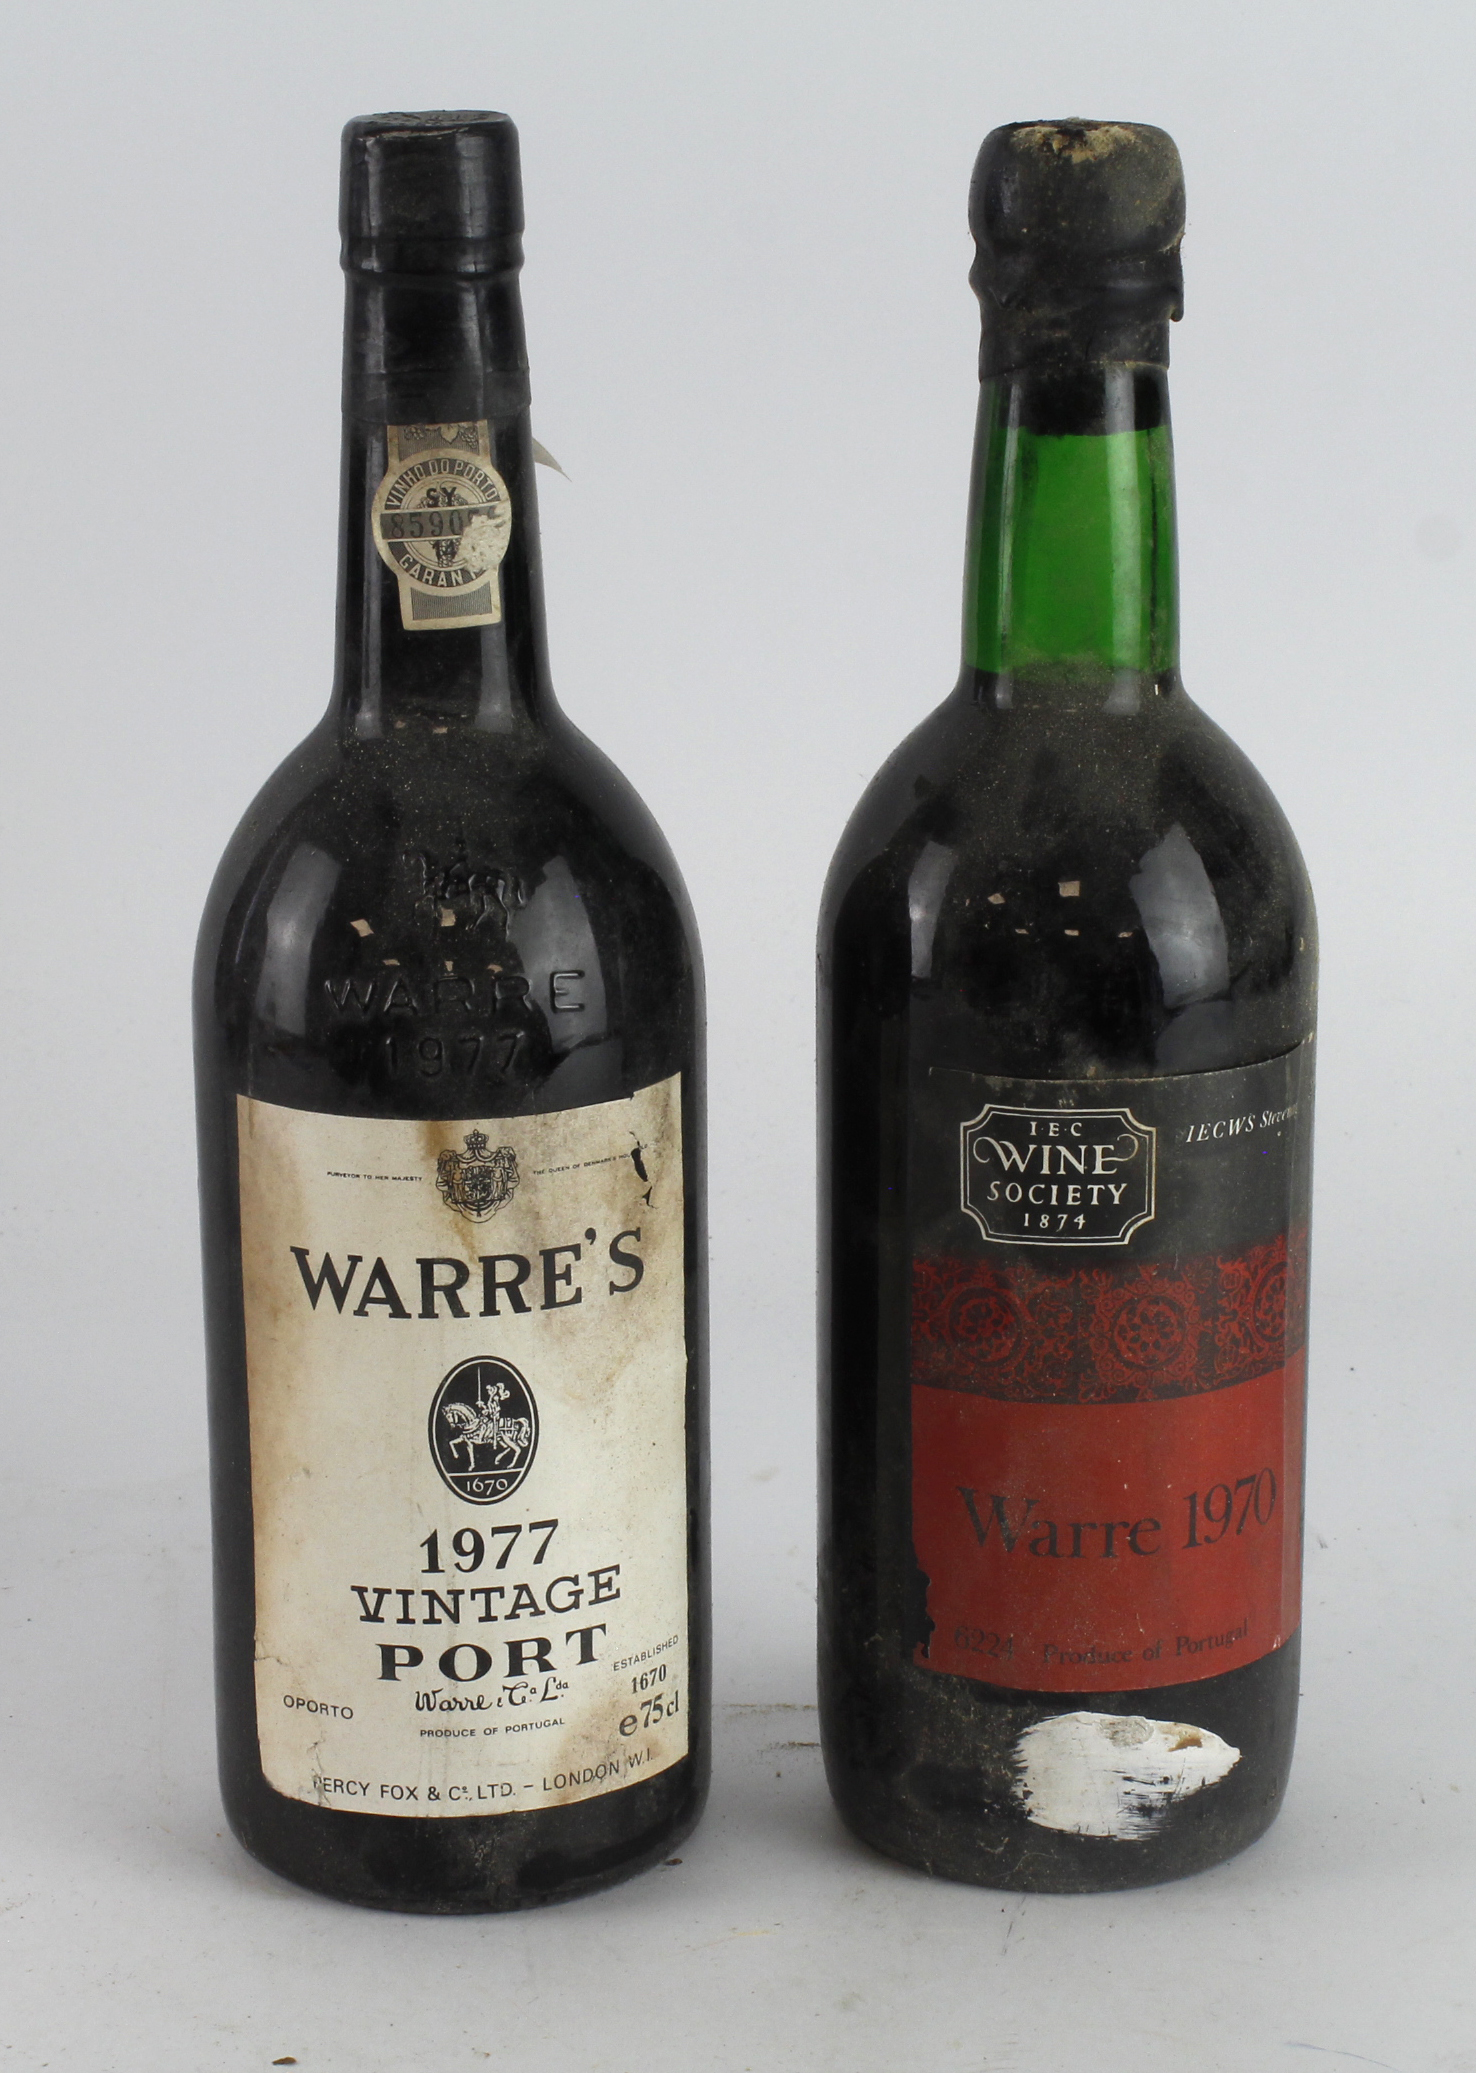 Port. Two bottles of Port, comprising Warres 1977 Vintage Port; The Wine Society Warre 1970, buyer